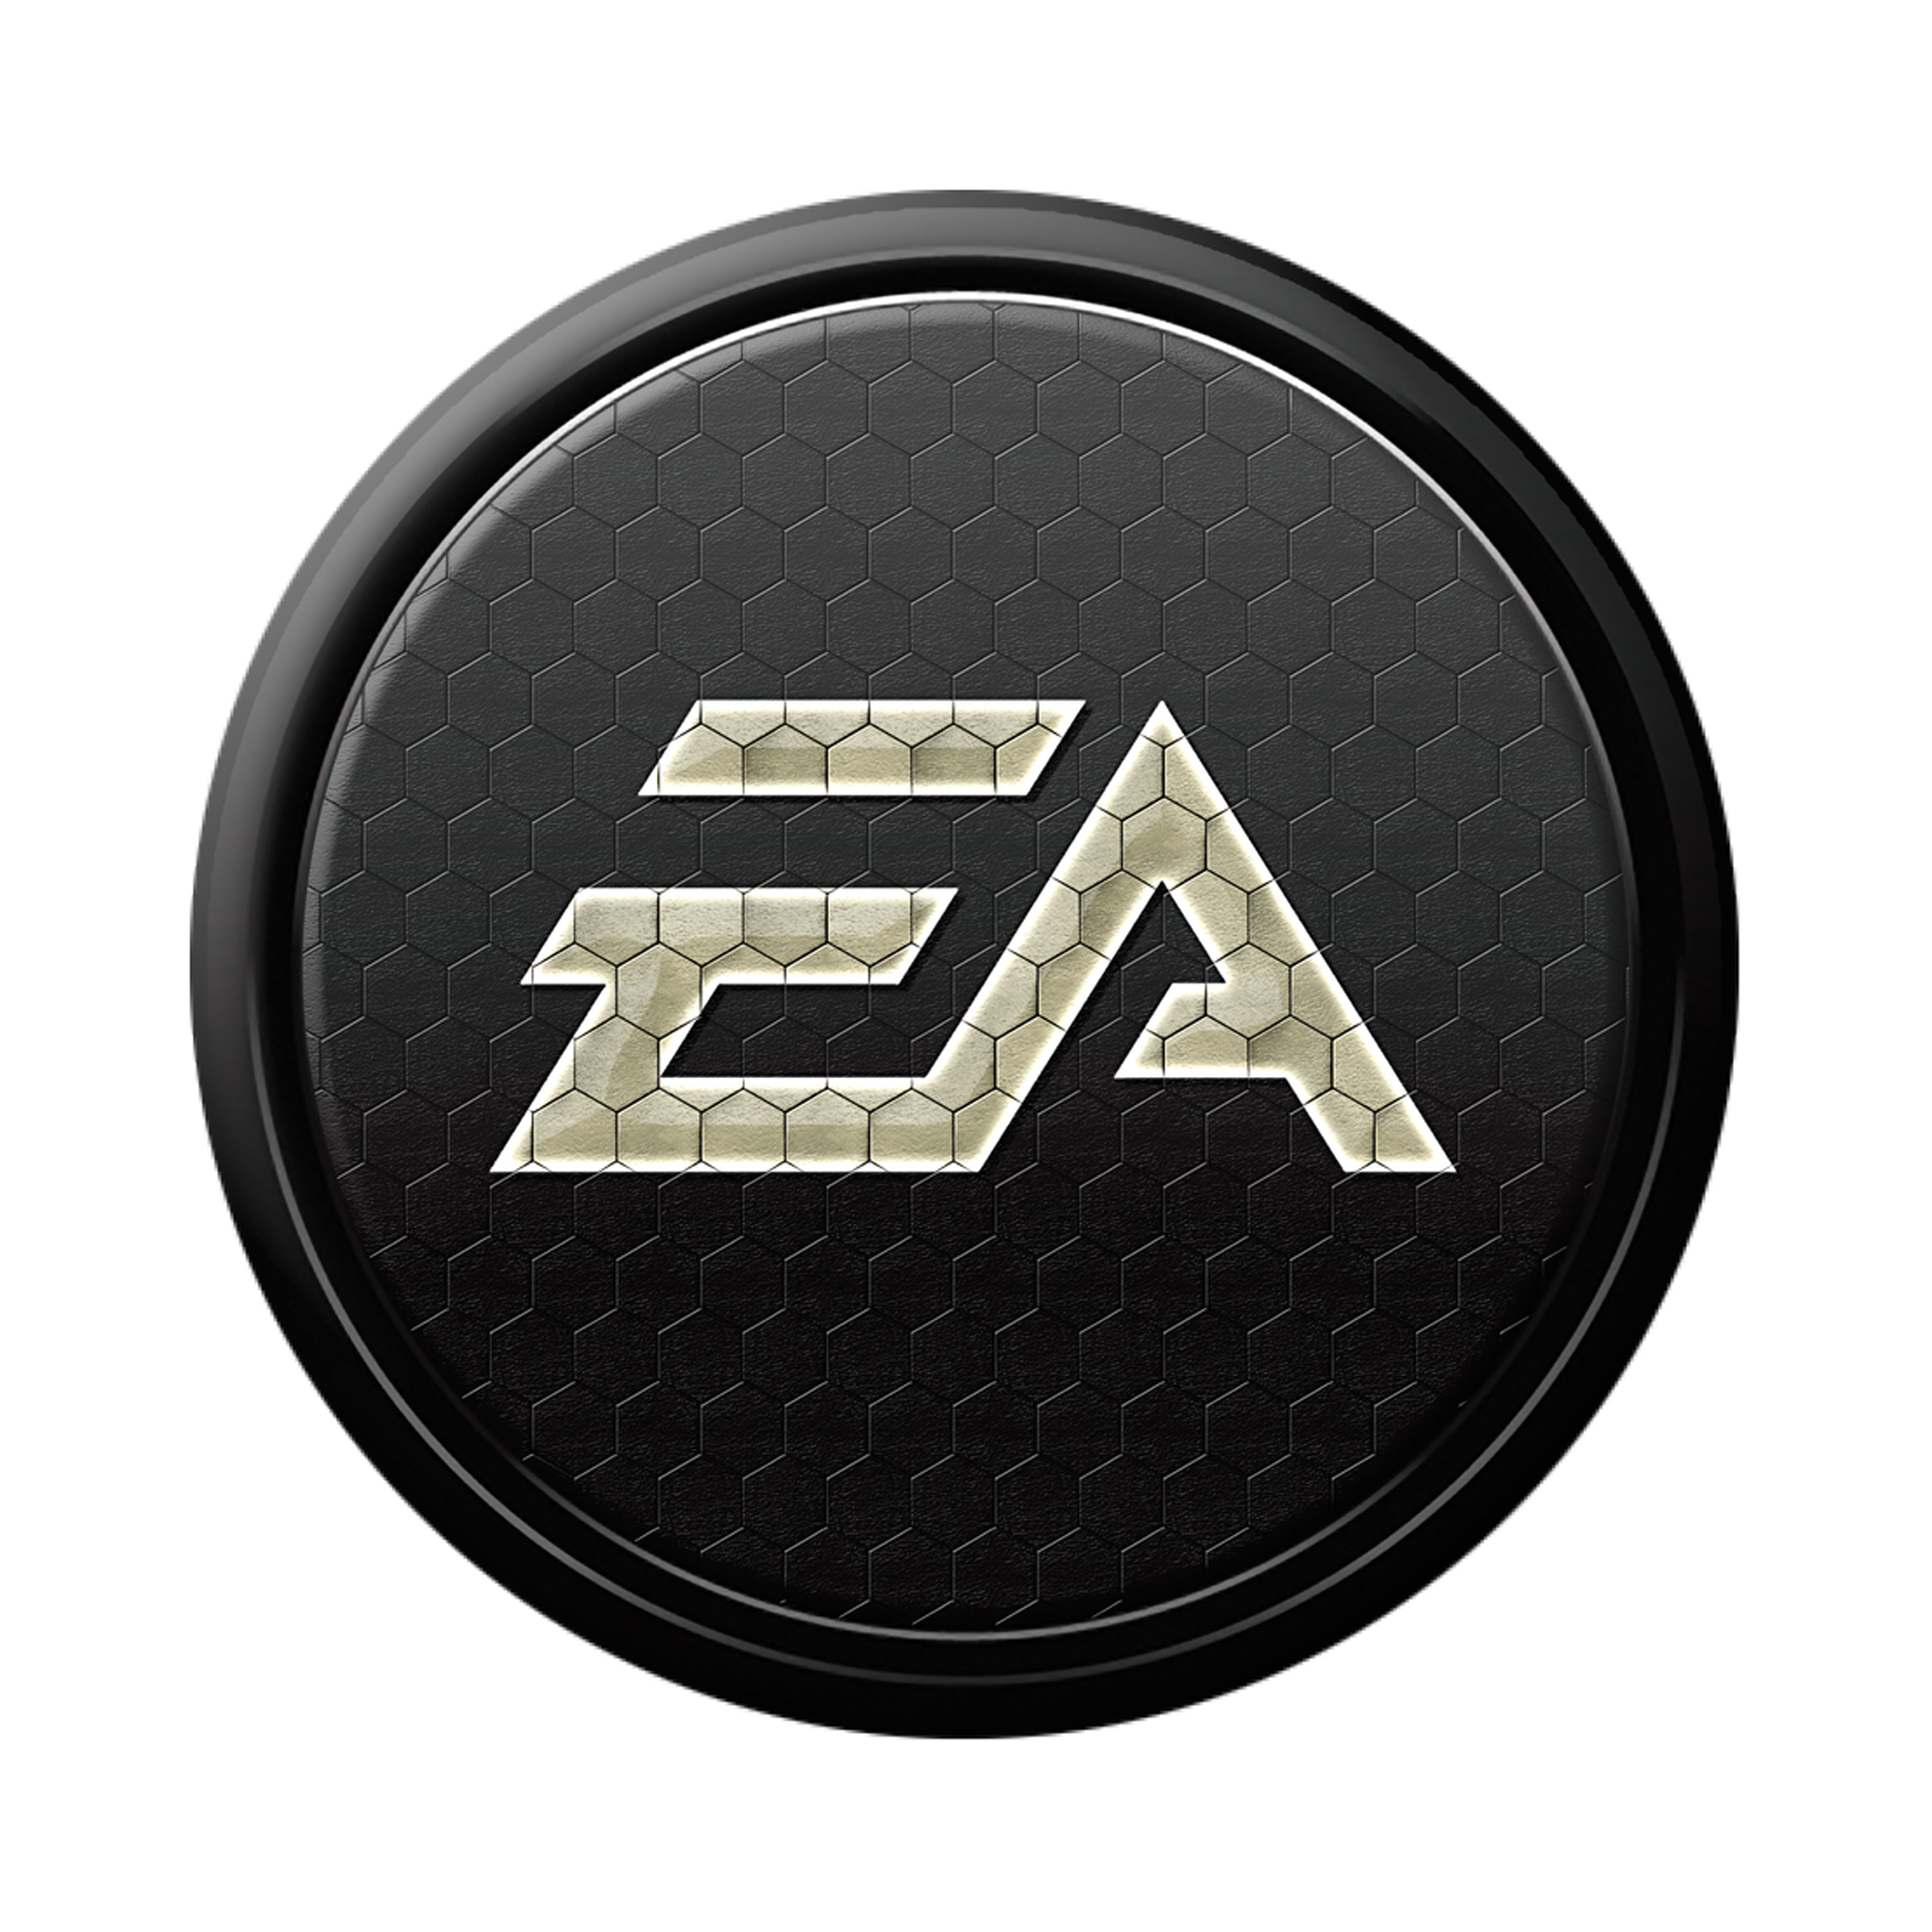 Ea support. EA. Логотип компании Electronic Arts. NFS логотип. Электроник Артс.